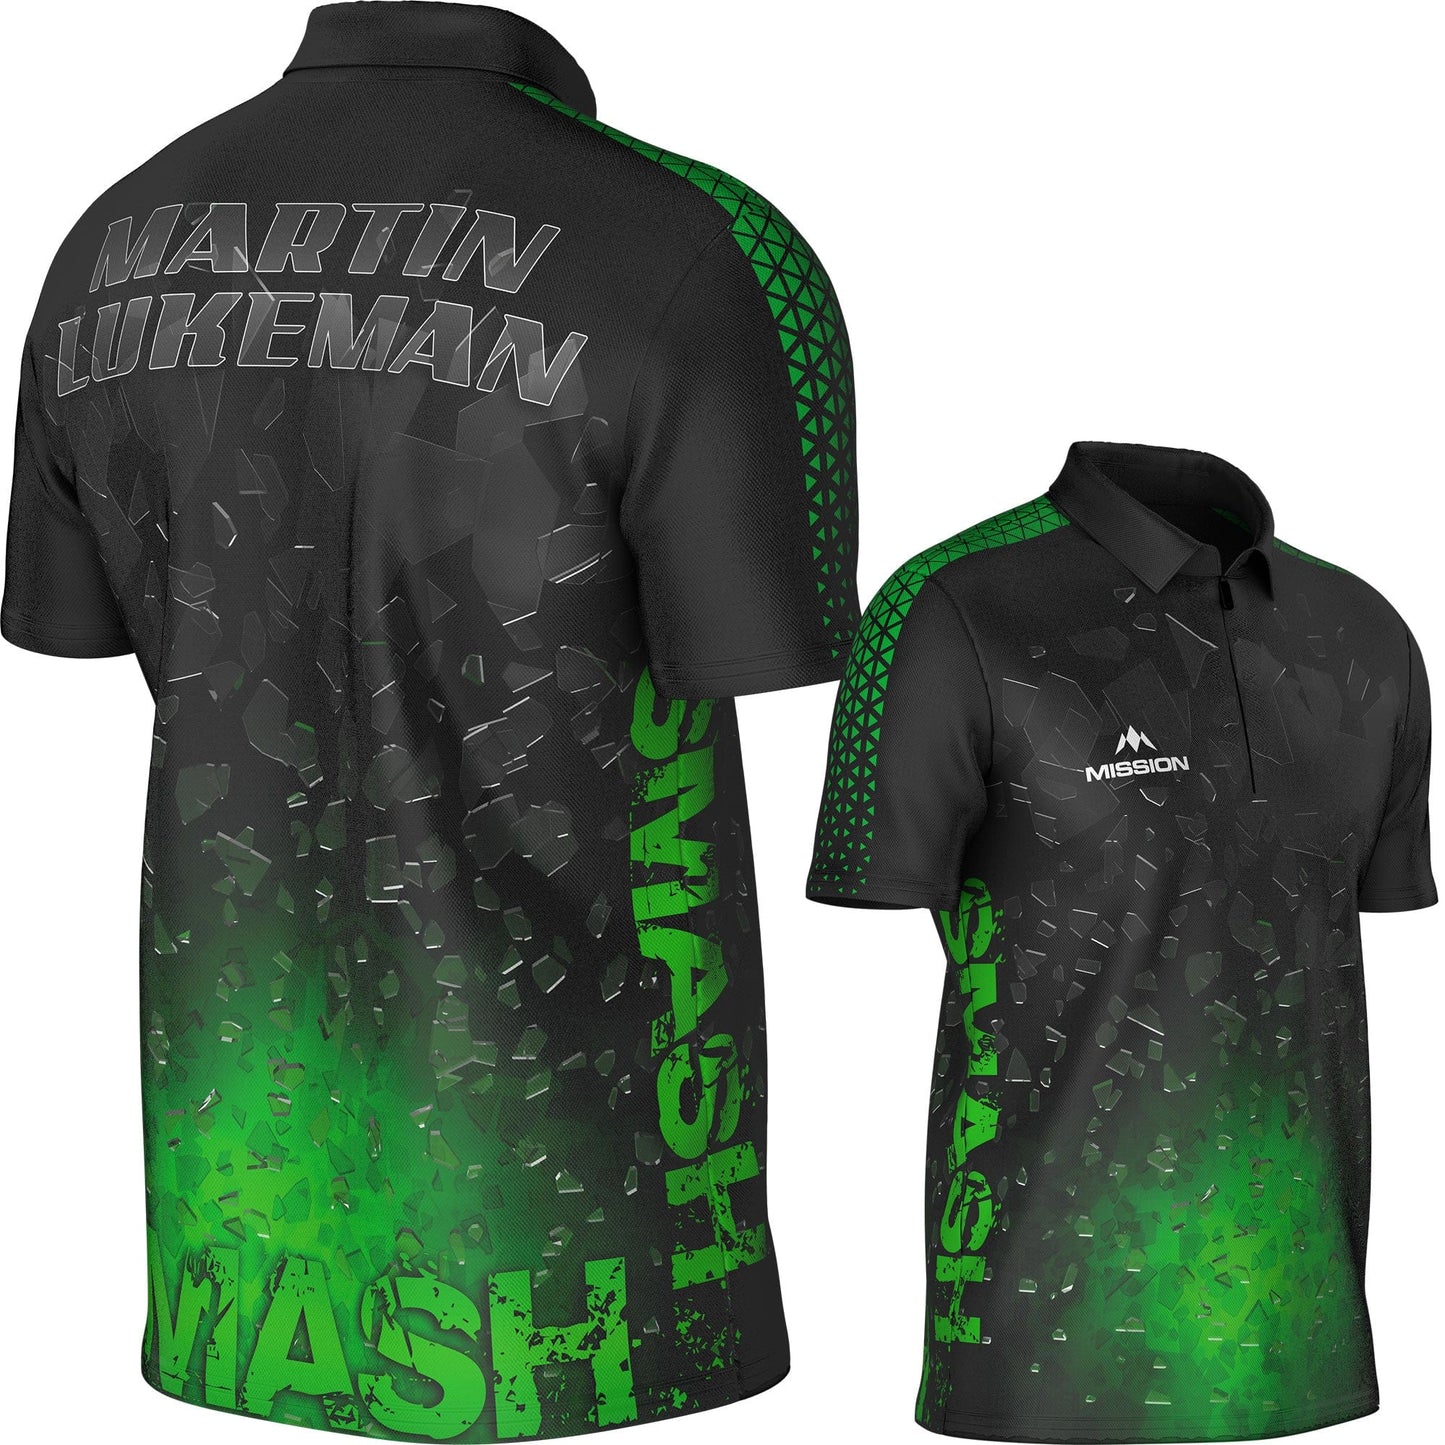 *Mission Player Dart Shirt - Martin Lukeman - Smash